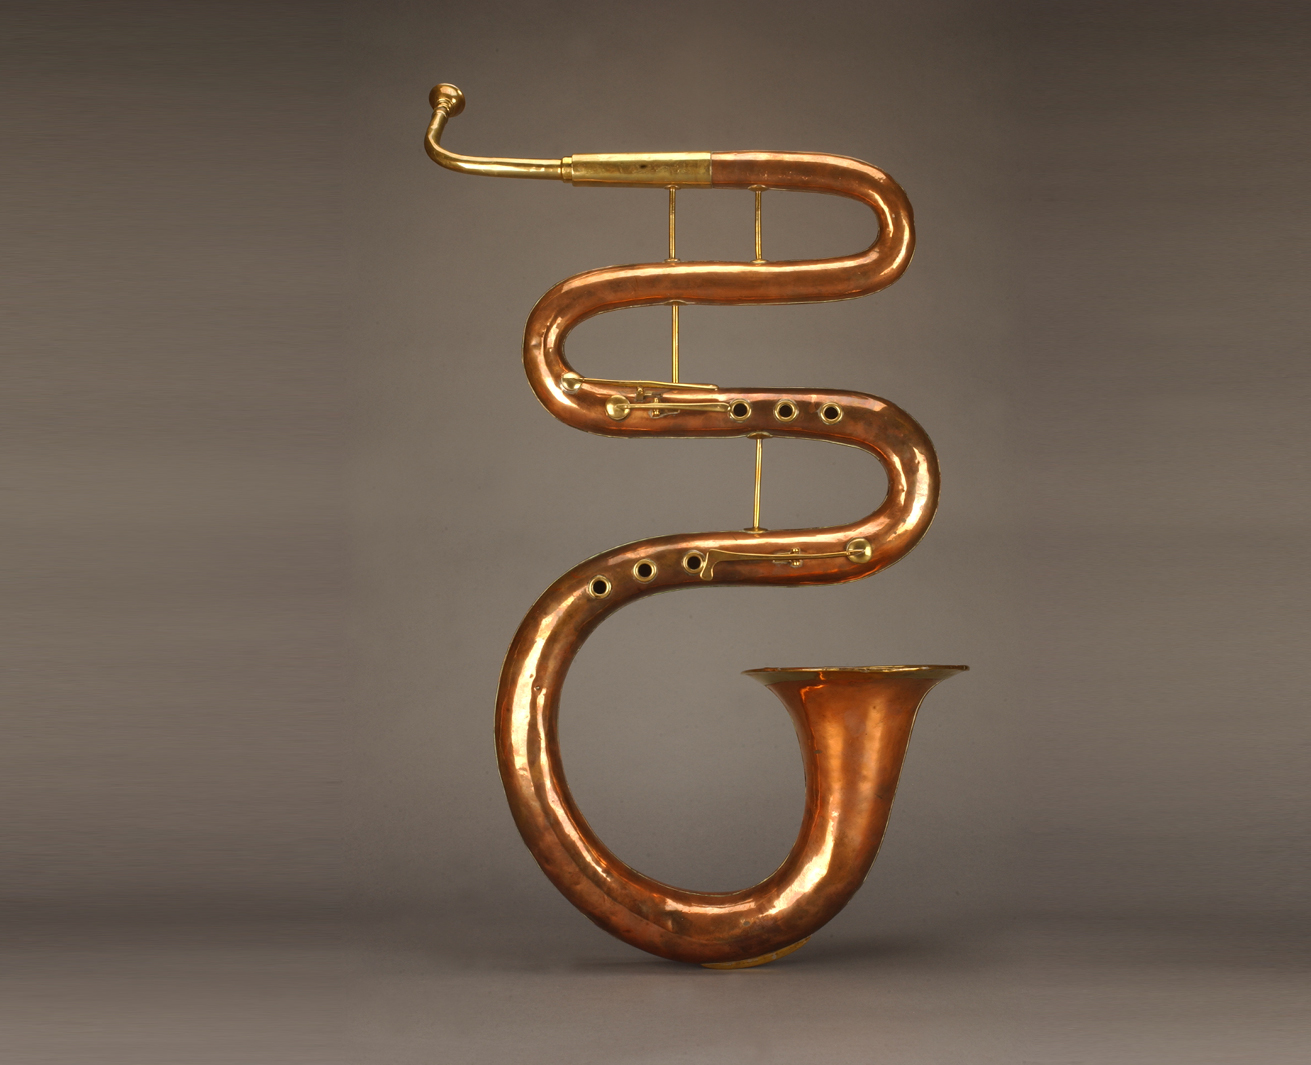 The Serpent Trumpet